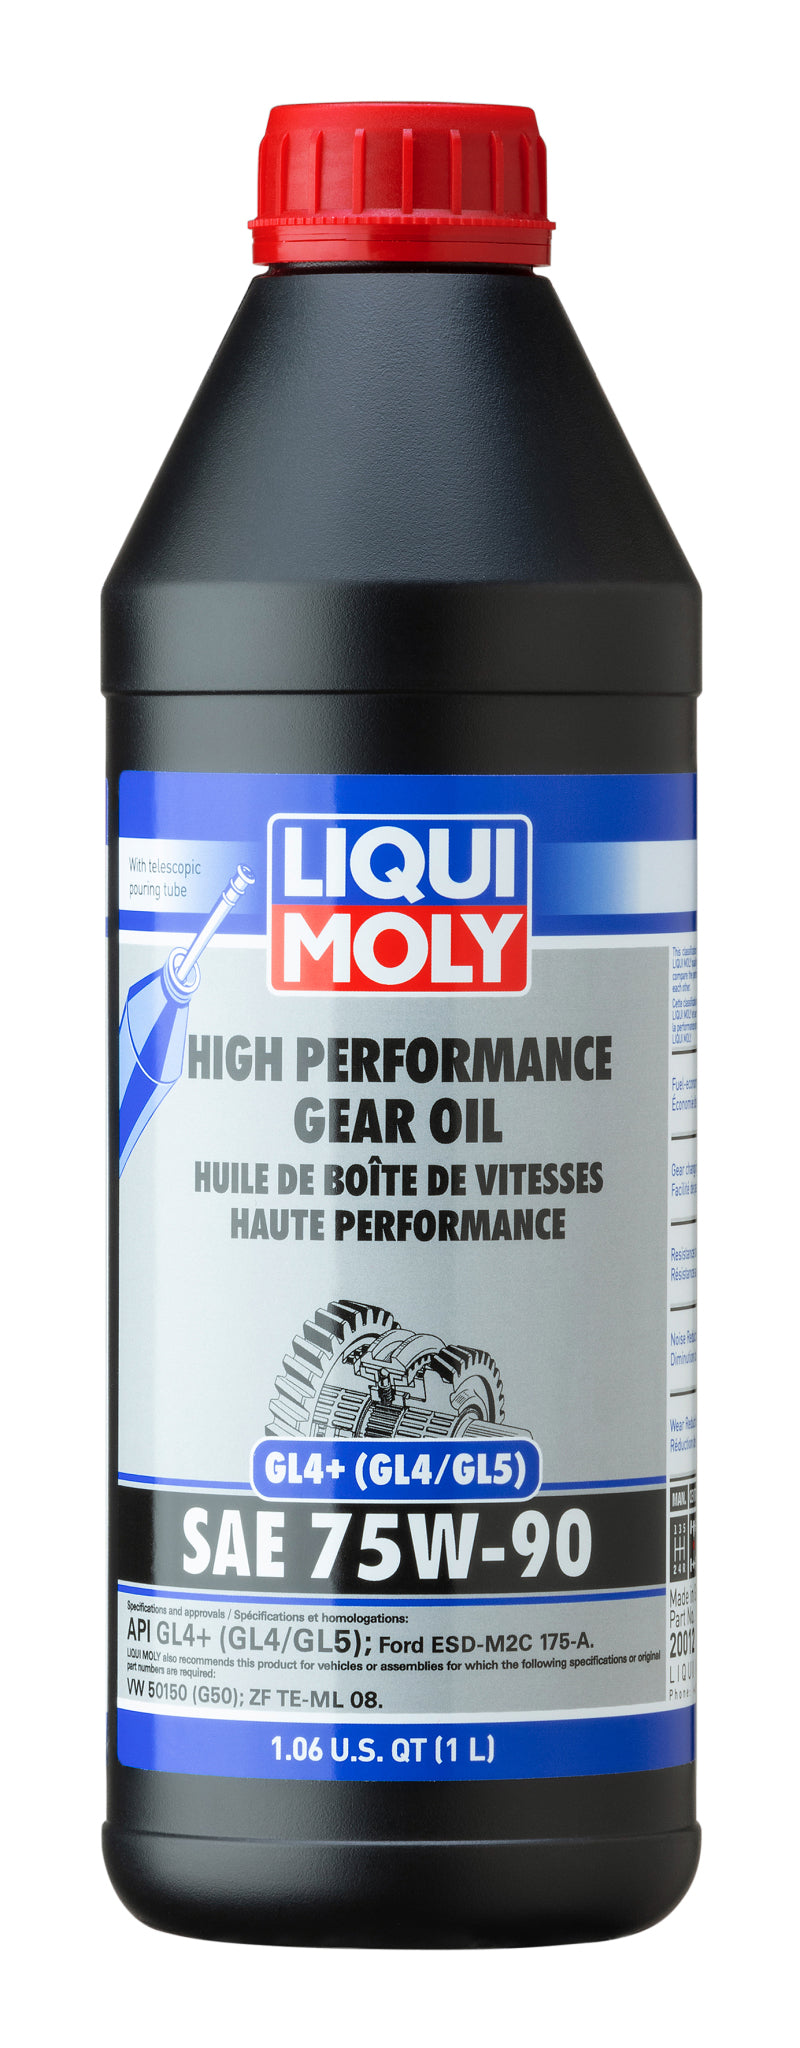 LIQUI MOLY 1L High Performance Gear Oil (GL4+) SAE 75W90.